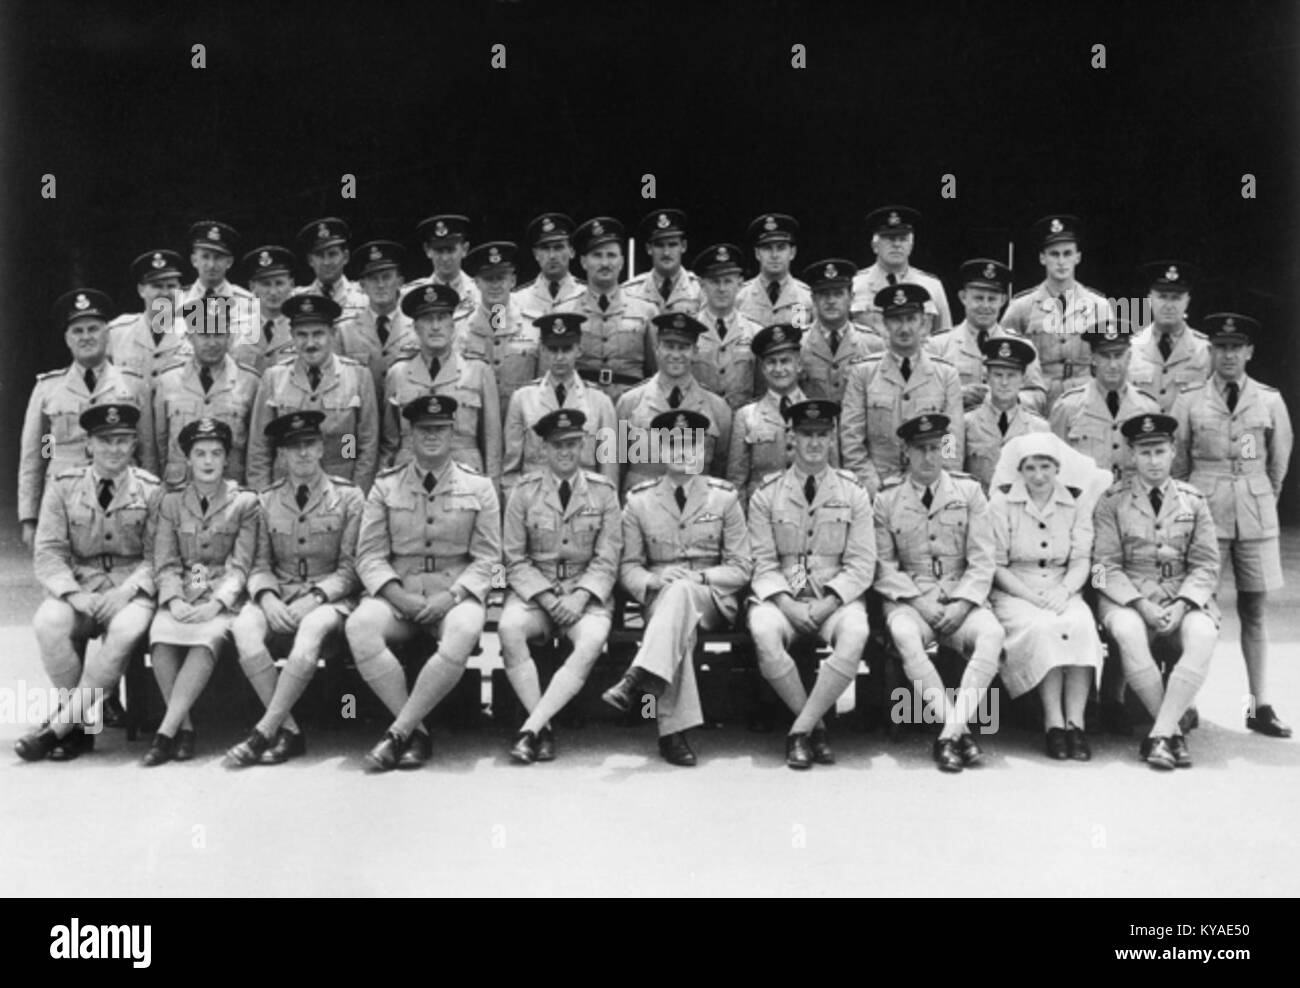 No. 1 Elementary Flying Training School RAAF 1942 (AWM P01375.003) Stock Photo